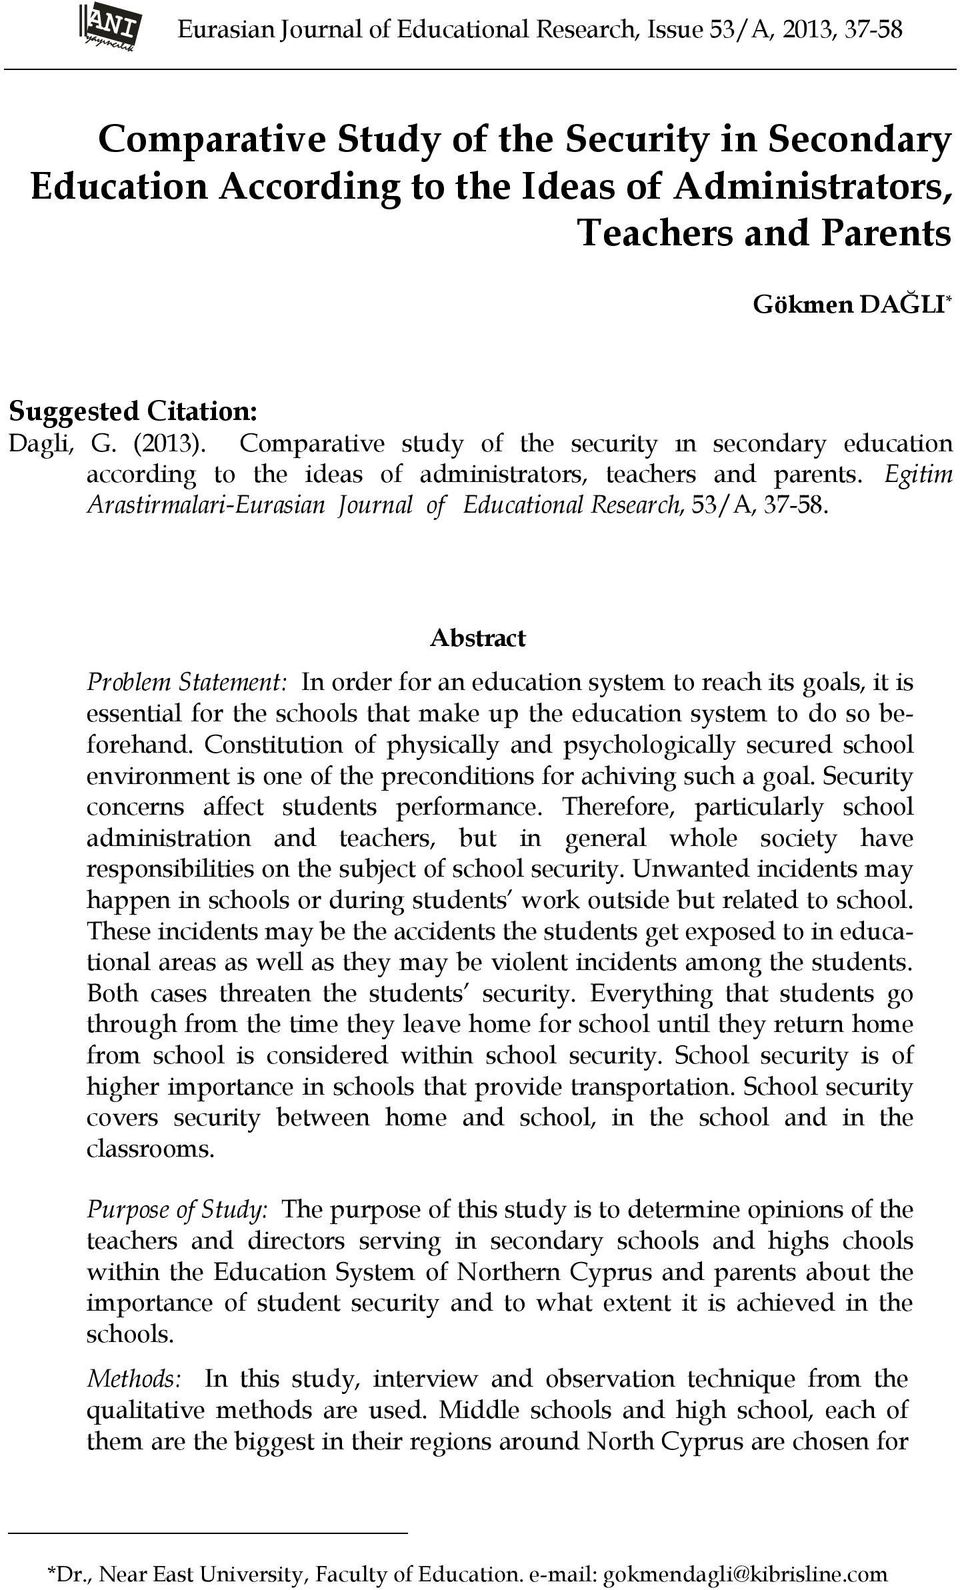 Egitim Arastirmalari-Eurasian Journal of Educational Research, 53/A, 37-58.